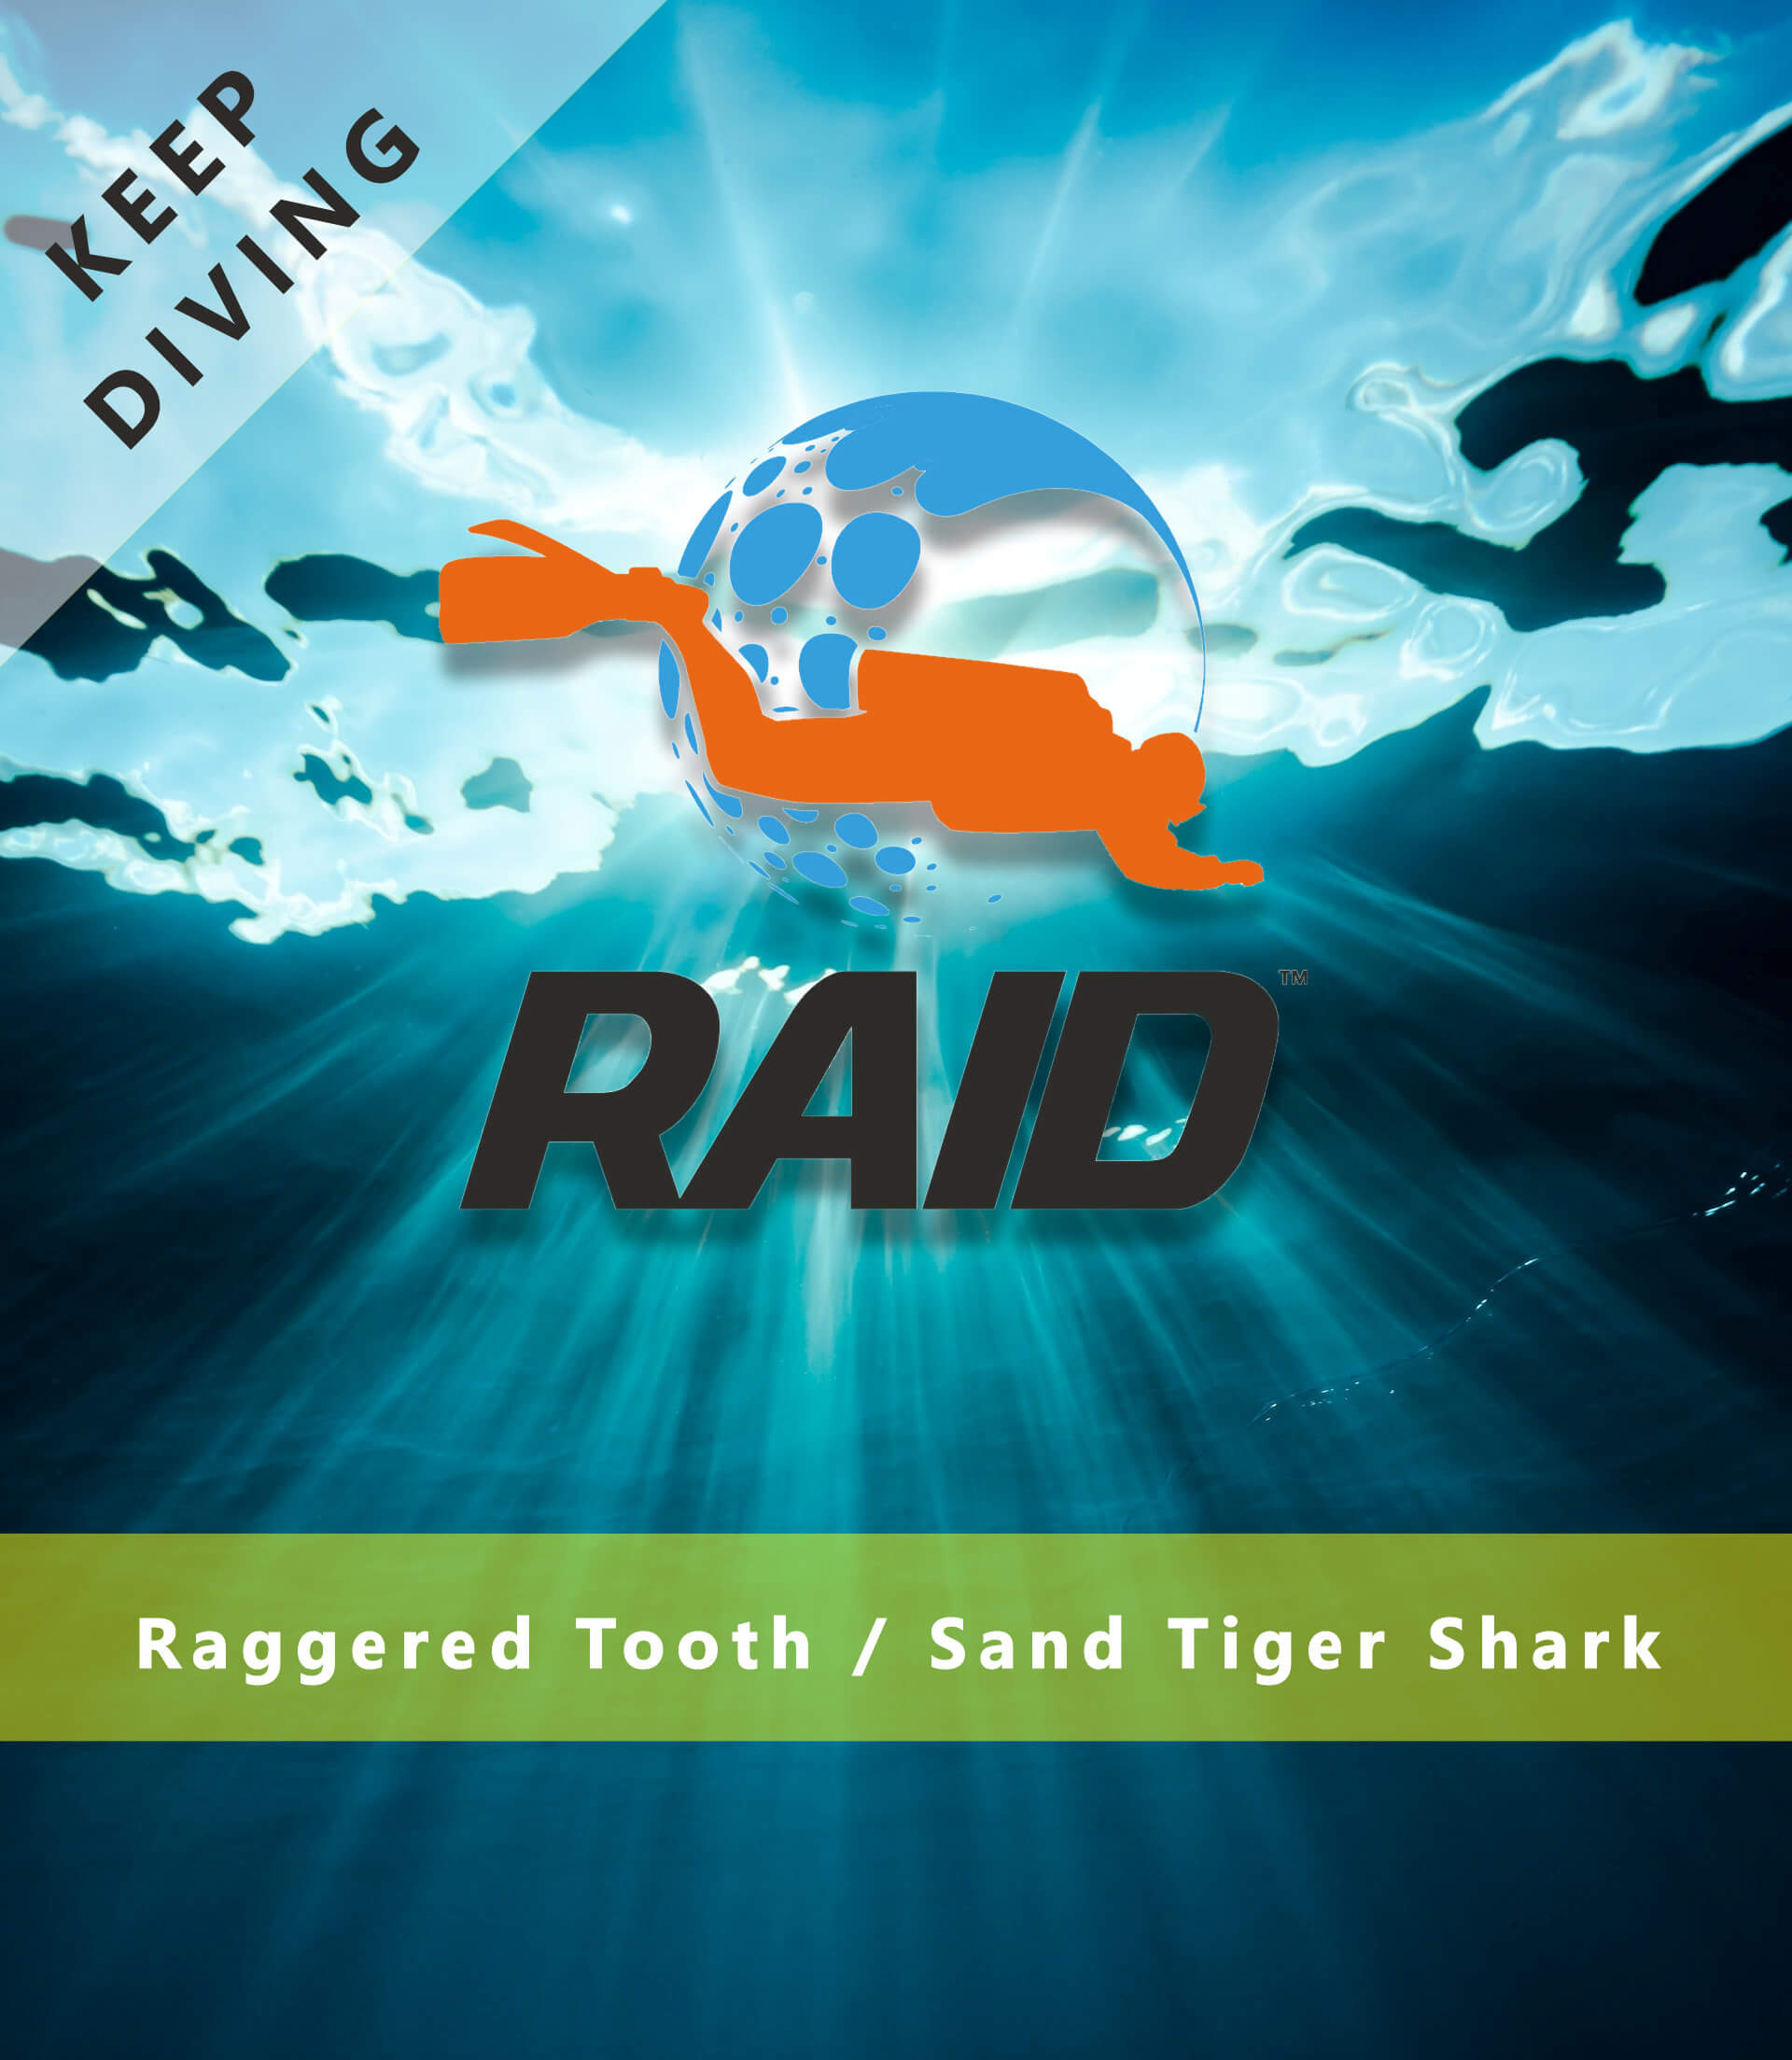 Keep Diving / Raggered Tooth - Sand Tiger Shark - RAID International Scuba Diving Course